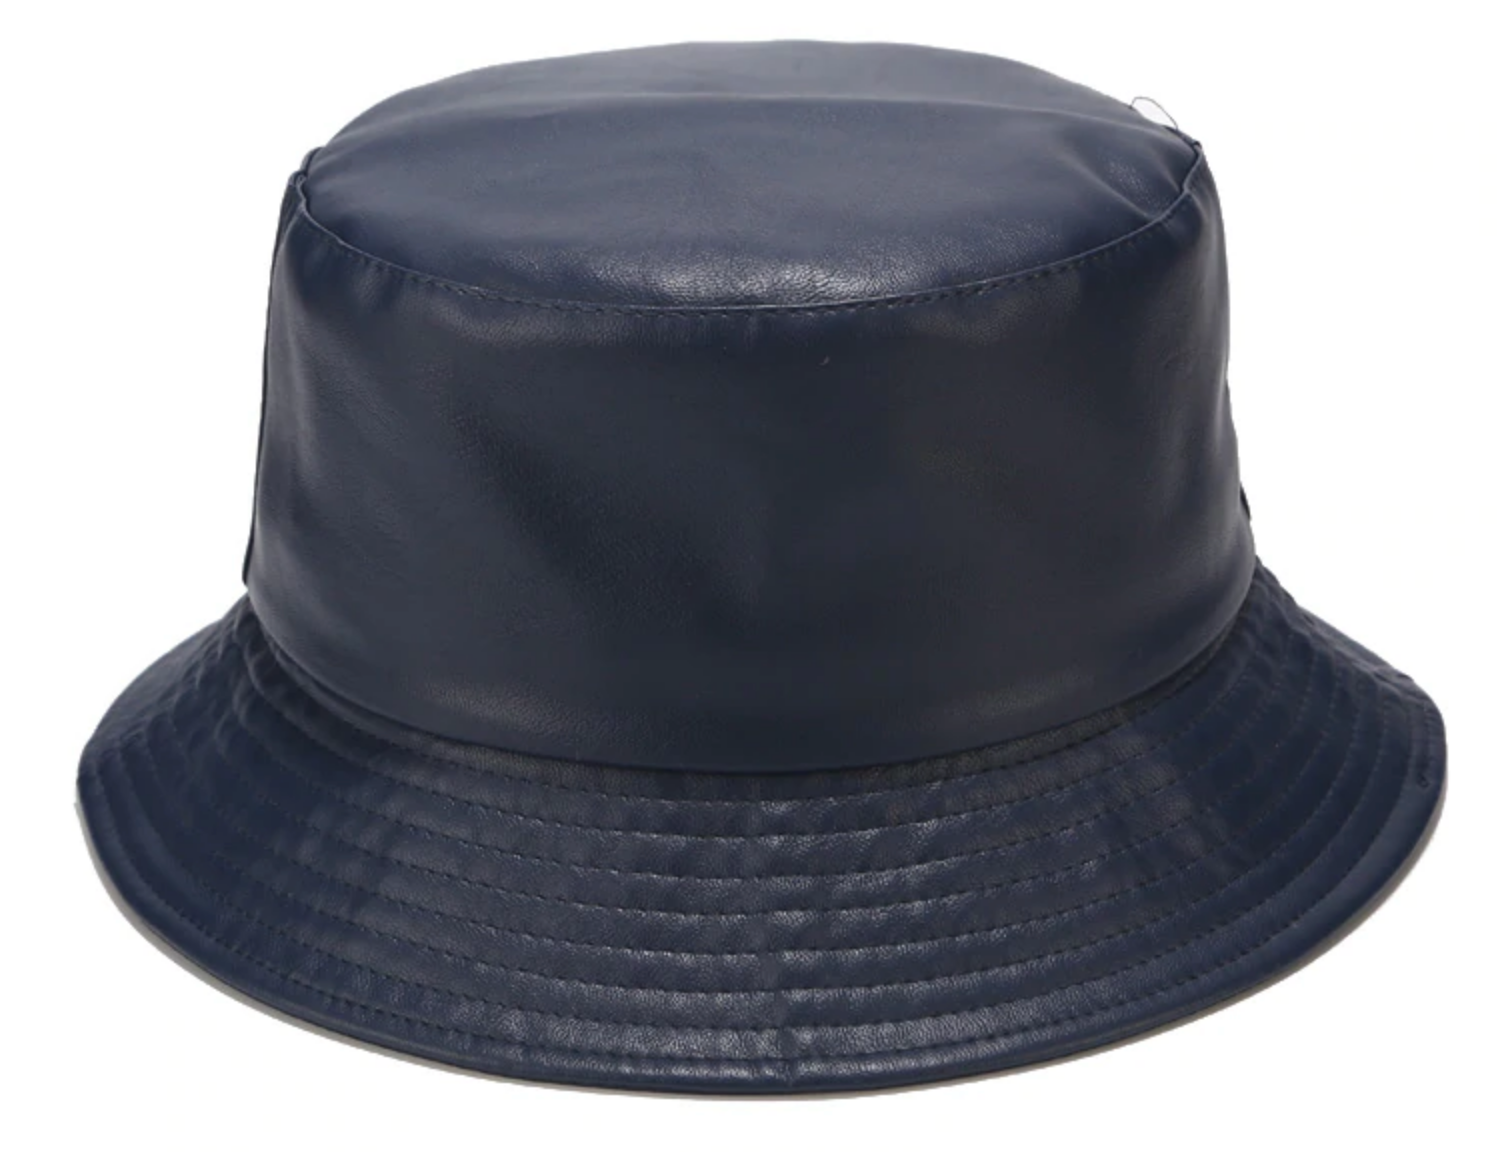 Pinter bucket hat